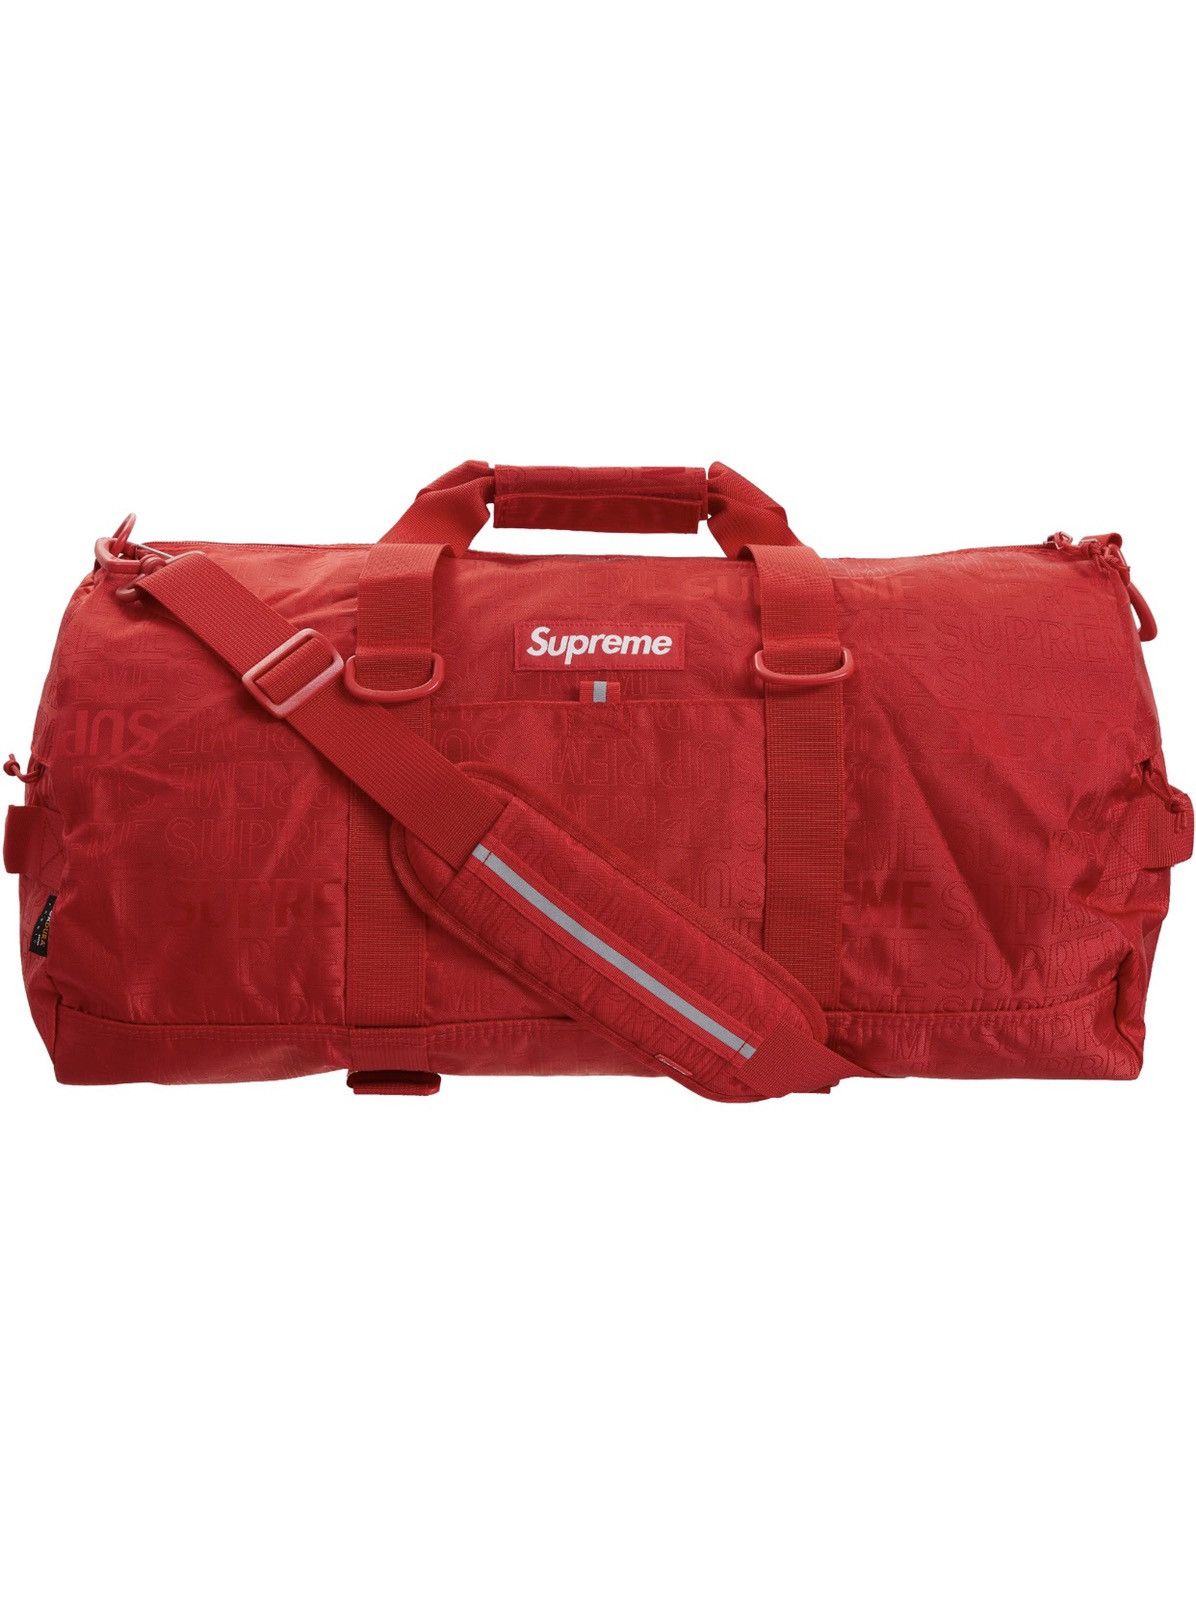 Buy Supreme Duffle Bag SS 19 - Stadium Goods